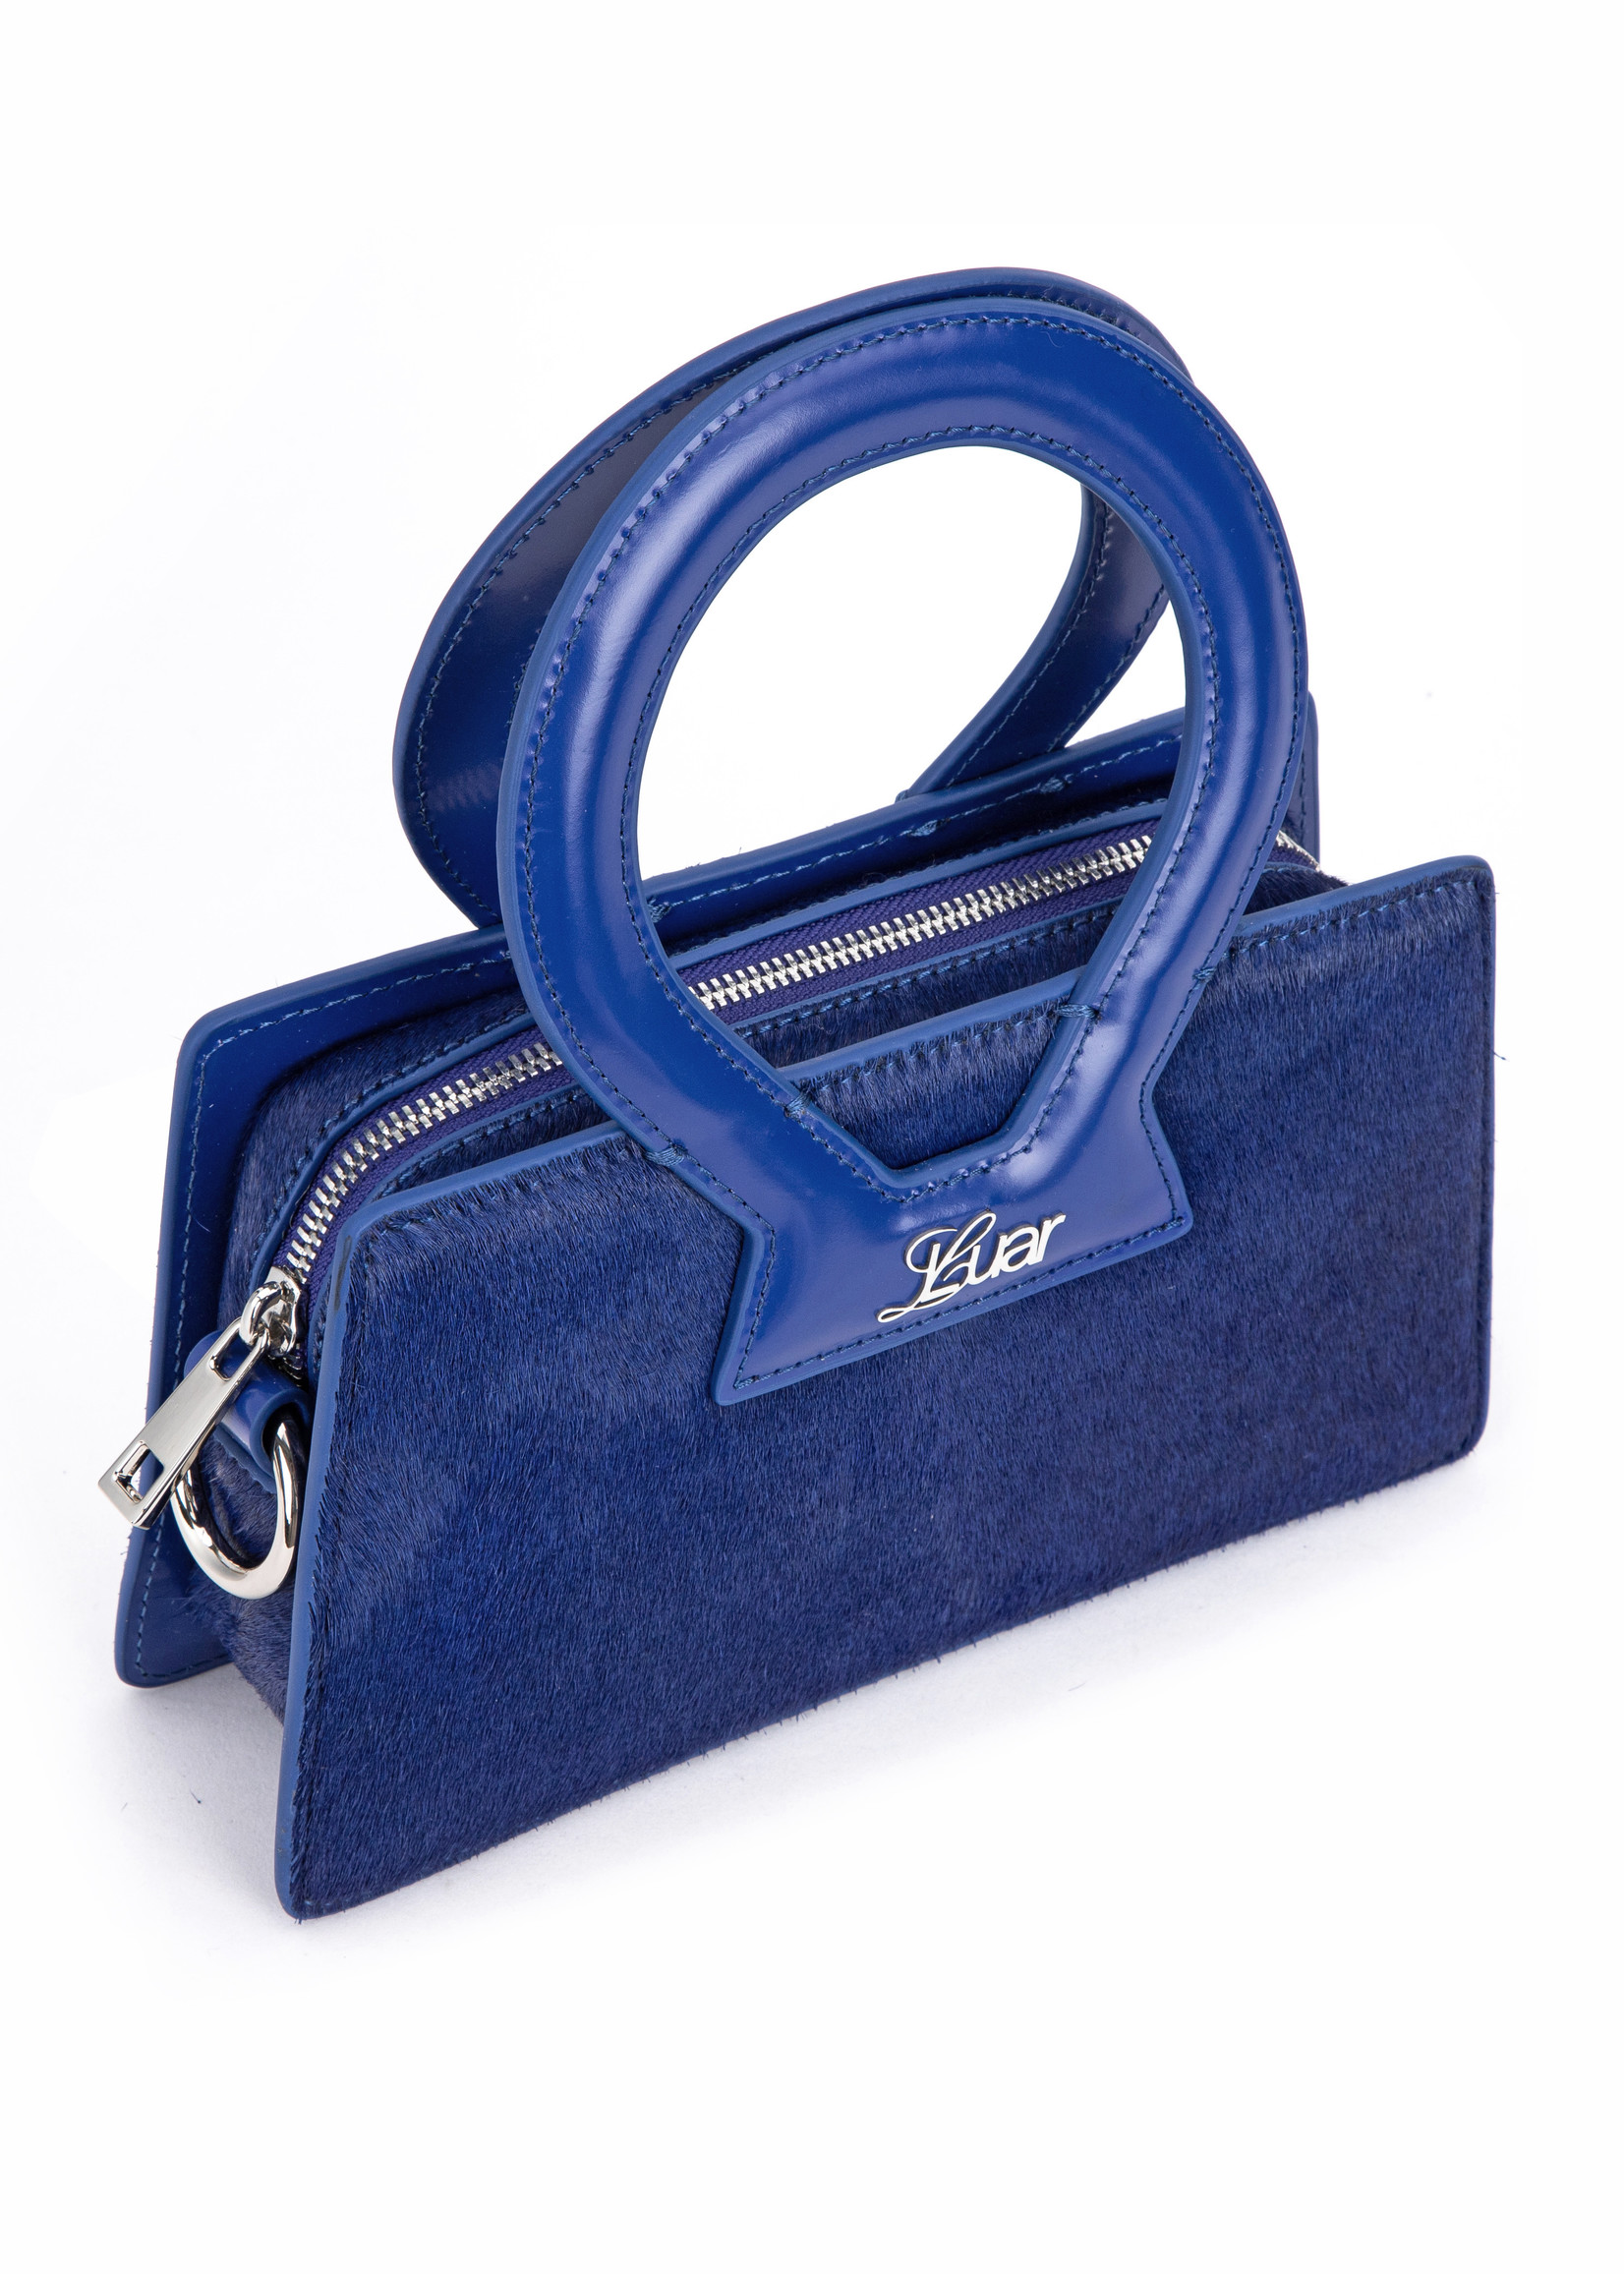 LUAR Small Ana Bag in Cobalt Blue Pony Hair